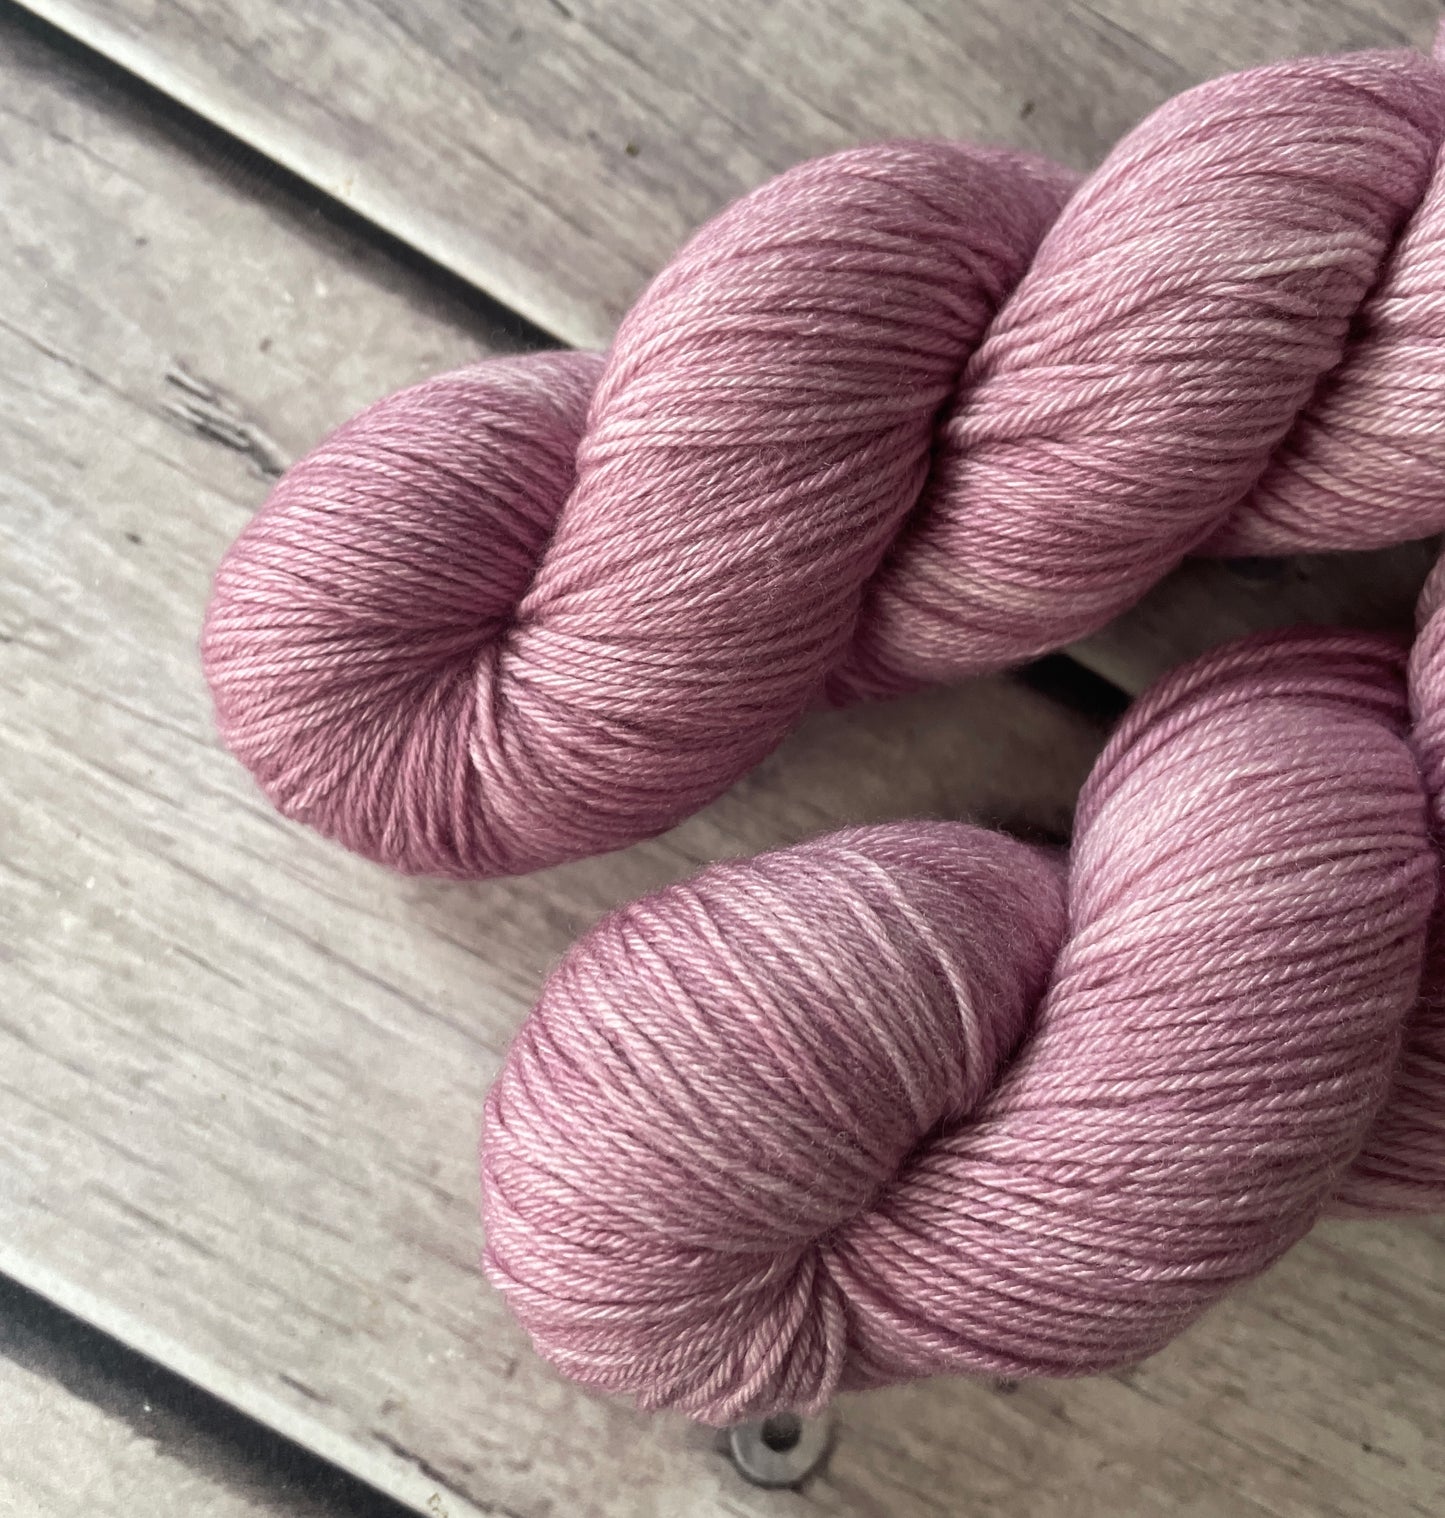 Tea Rose ooak - sock yarn in merino & nylon - Darjeeling